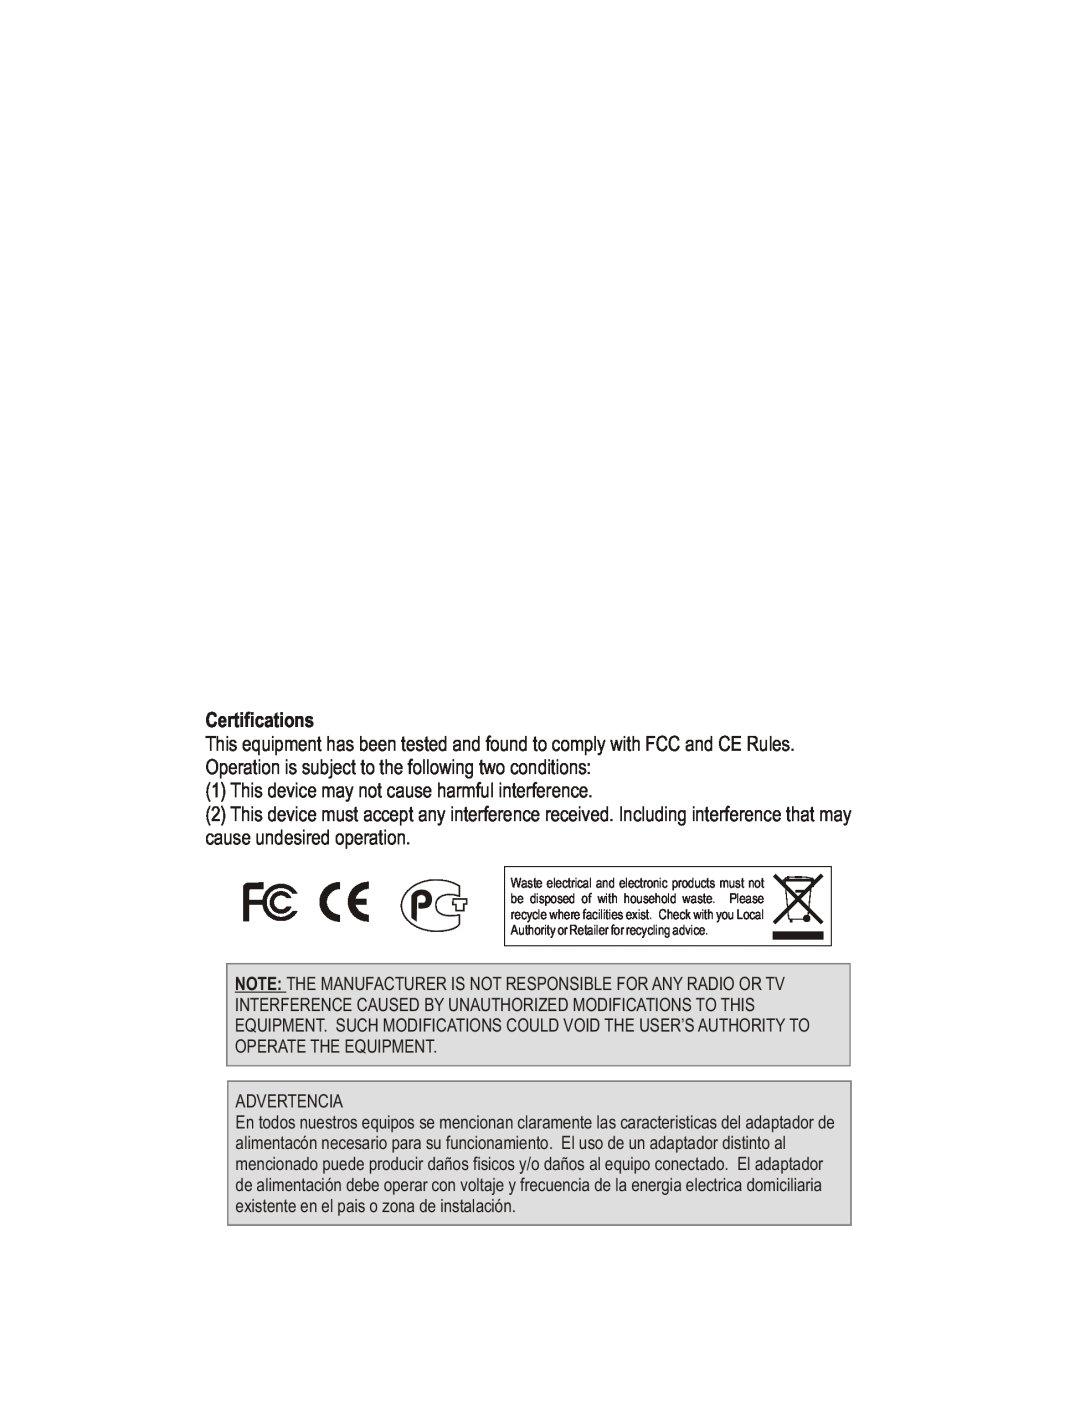 TRENDnet TEG-S224 manual Certifications 